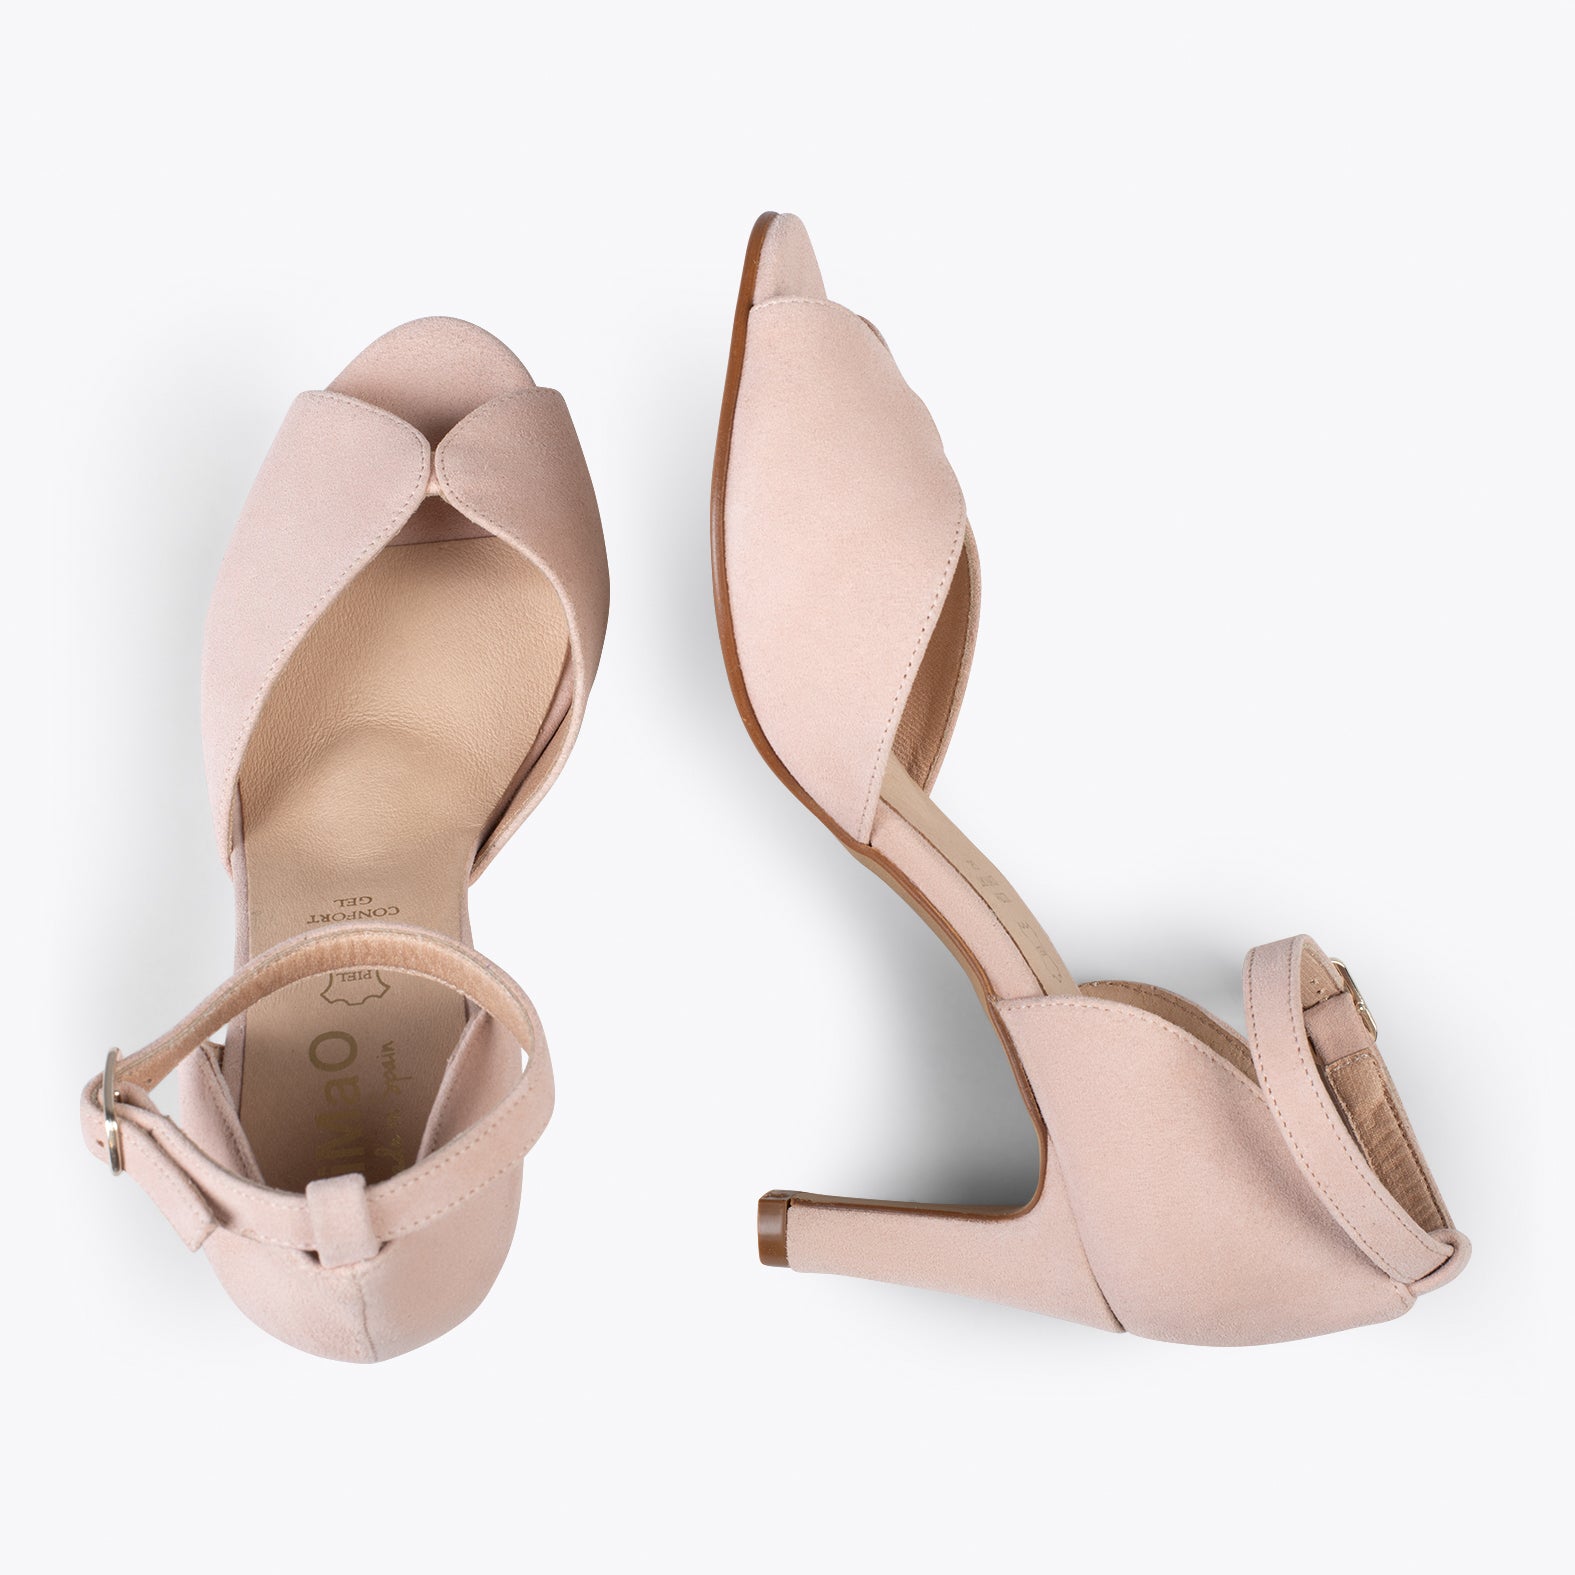 PETAL – NUDE high heel sandal